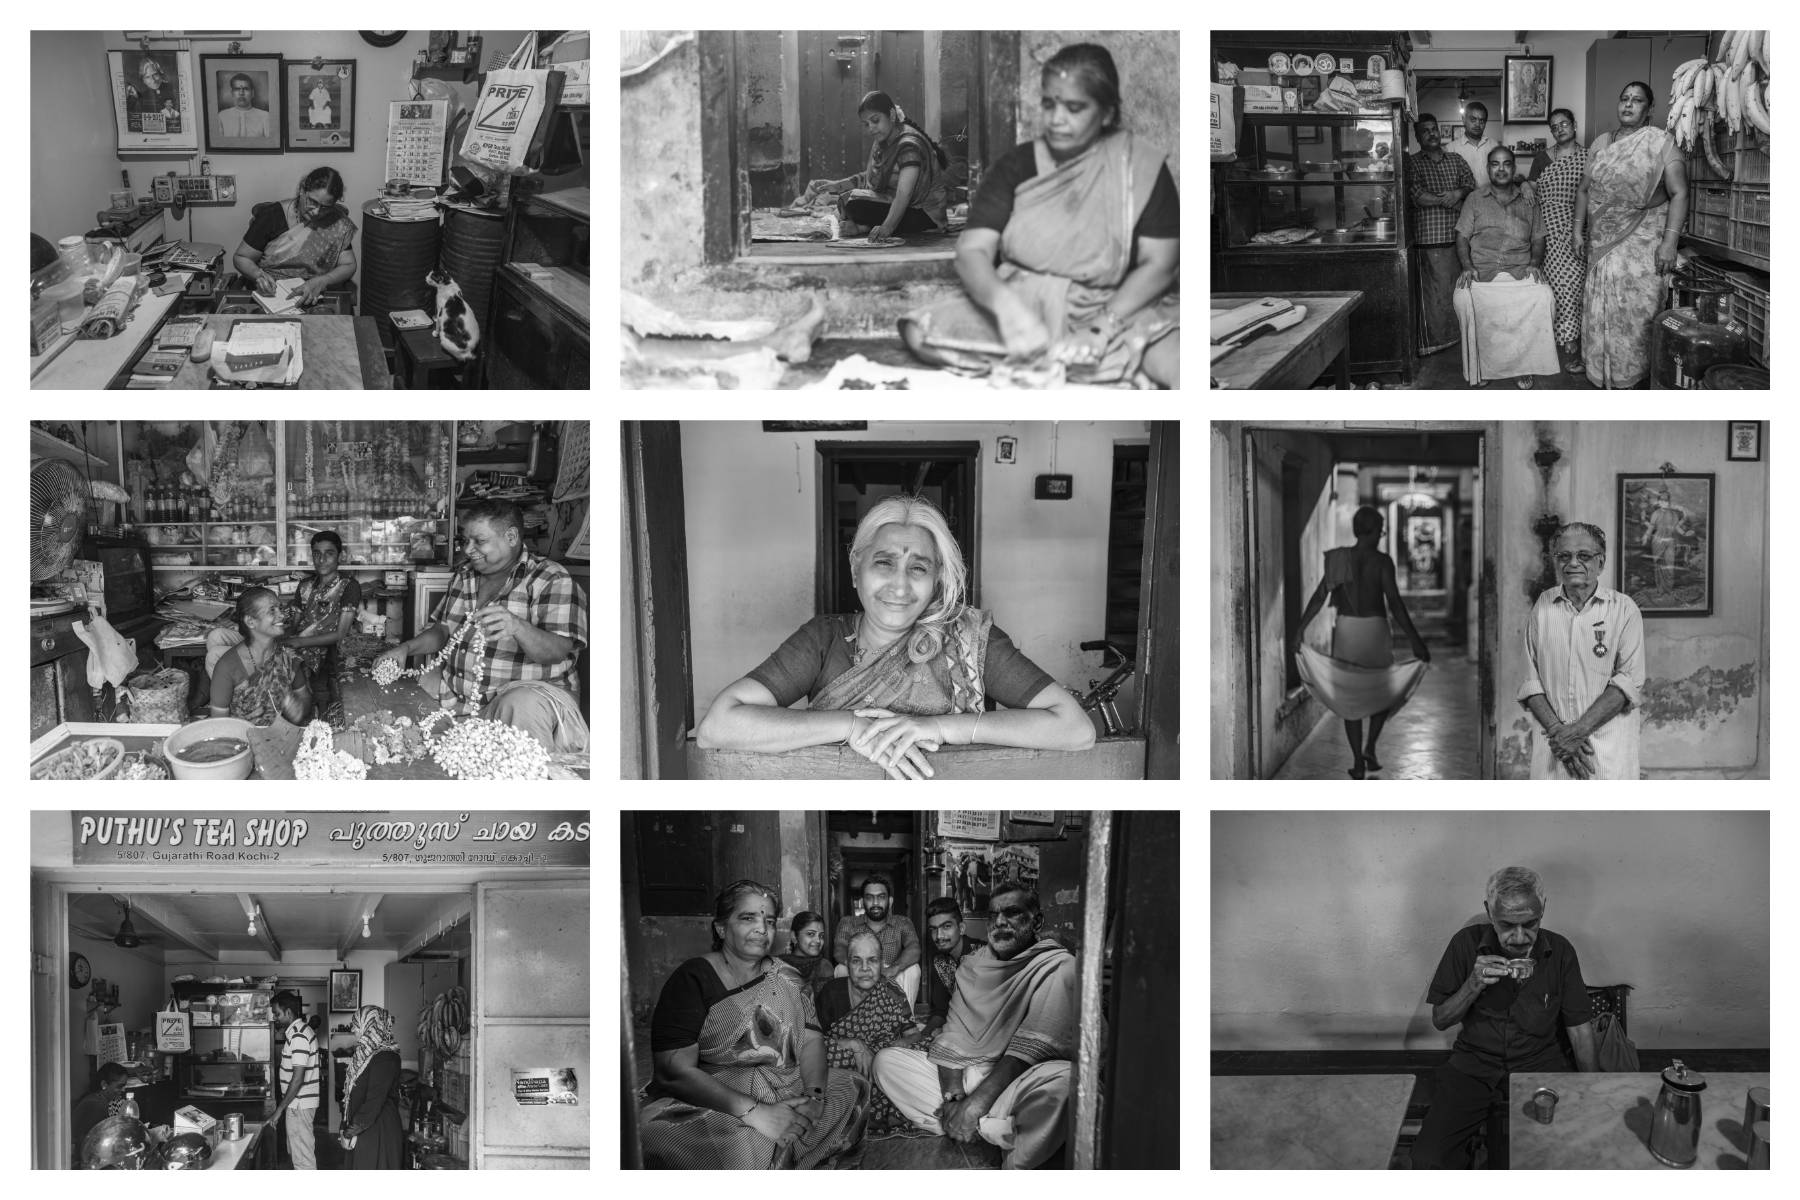 
COMMUNITIES OF KOCHI  Biju's Ibrahim Photography exhibition curated by Riyas Komu (2017)